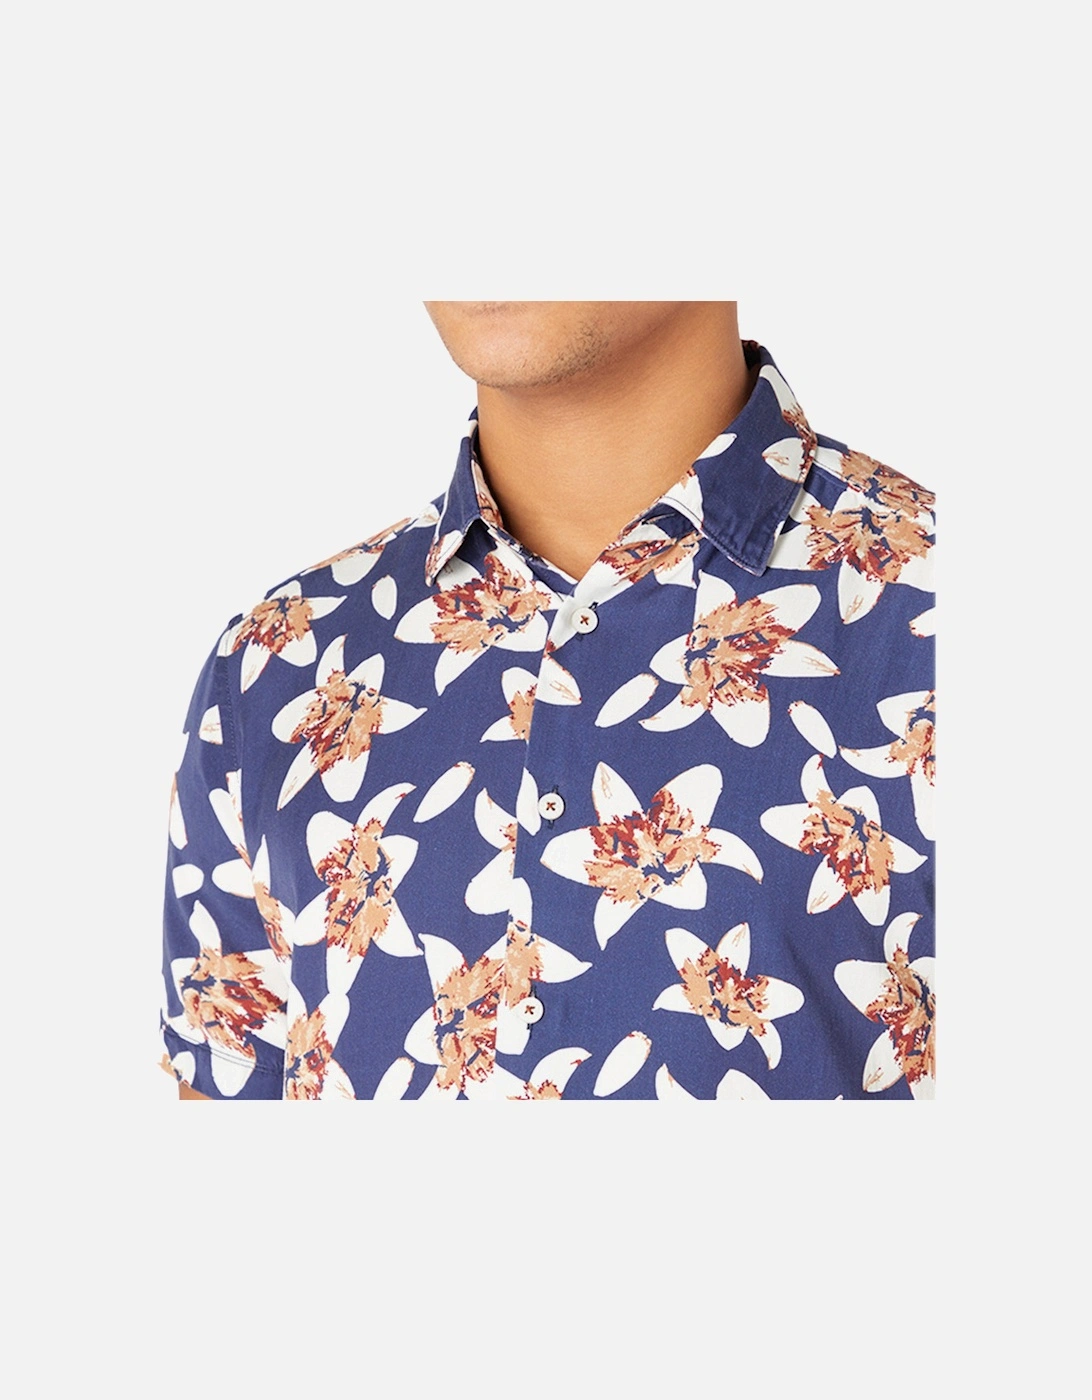 Mens Short Sleeve Flower Print Shirt (Navy)